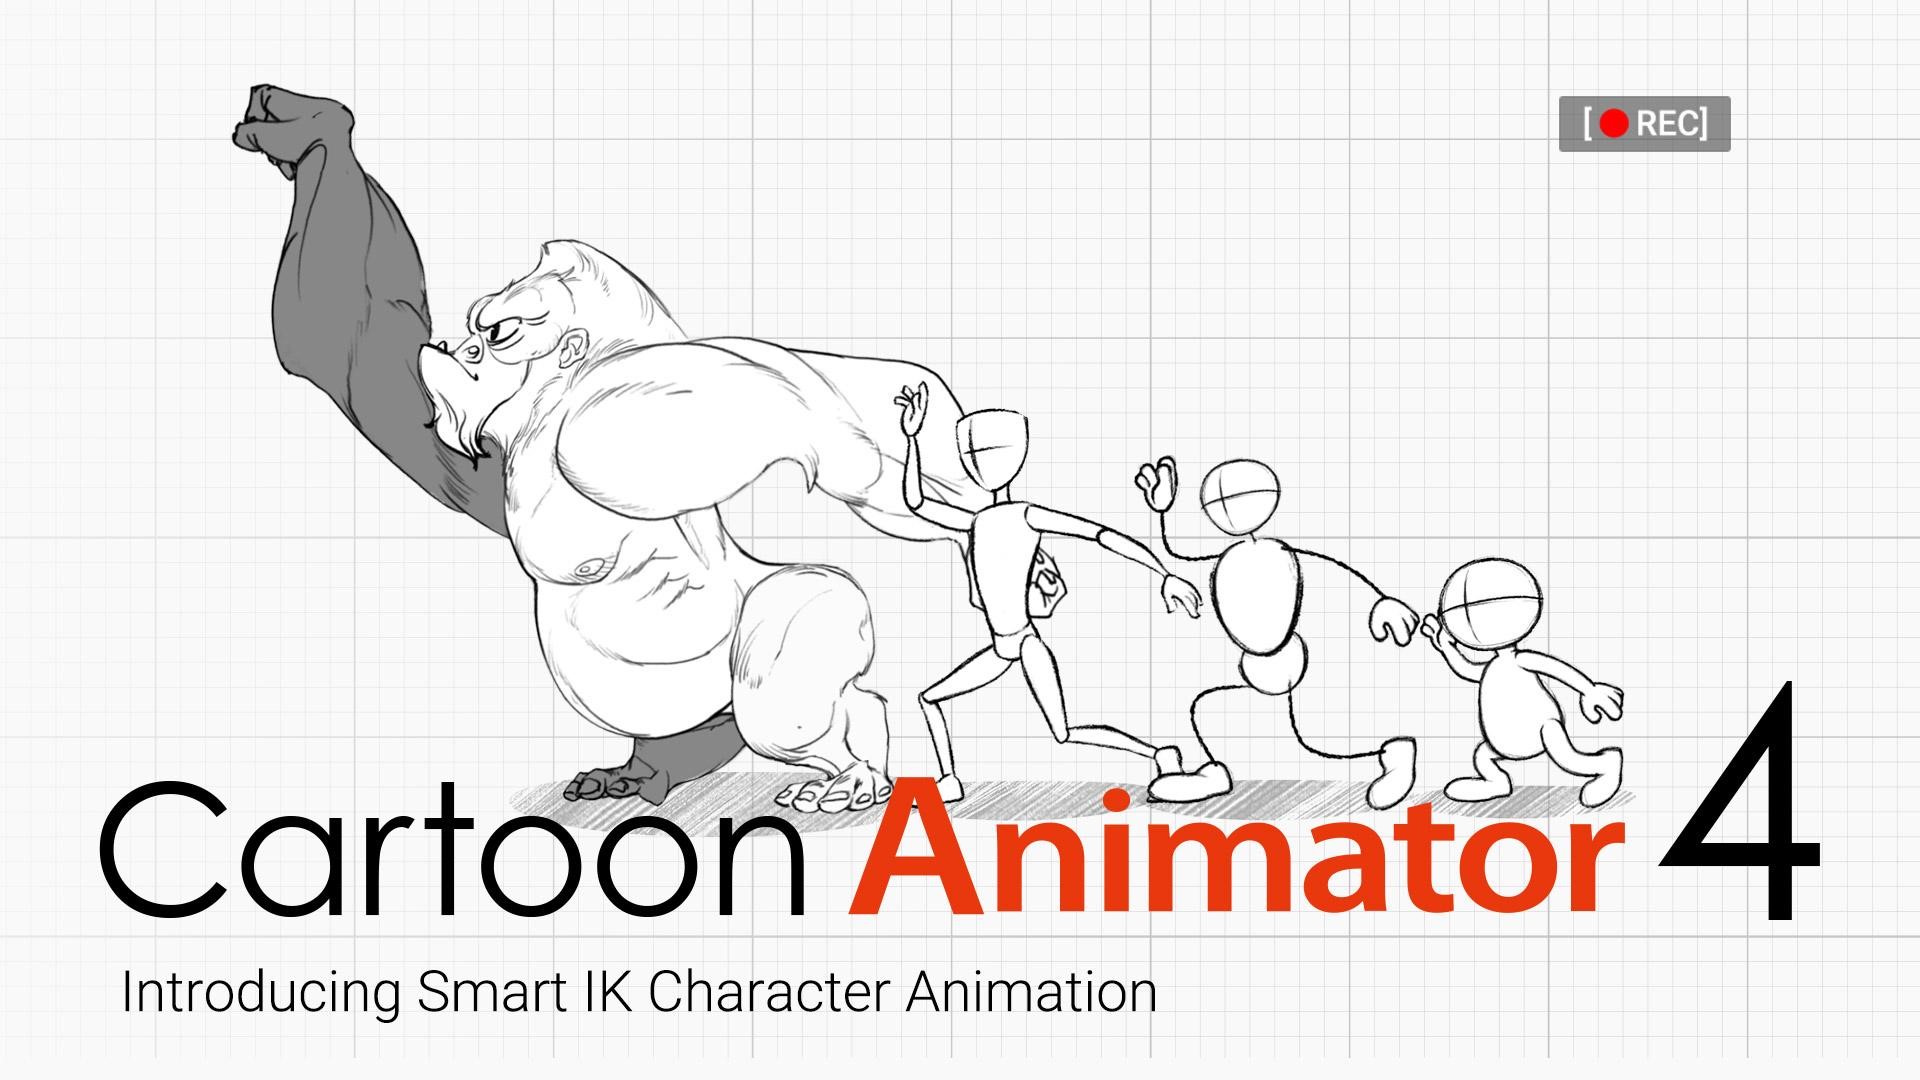 Reallusion CrazyTalk Animator Rebrands as Cartoon Animator 4